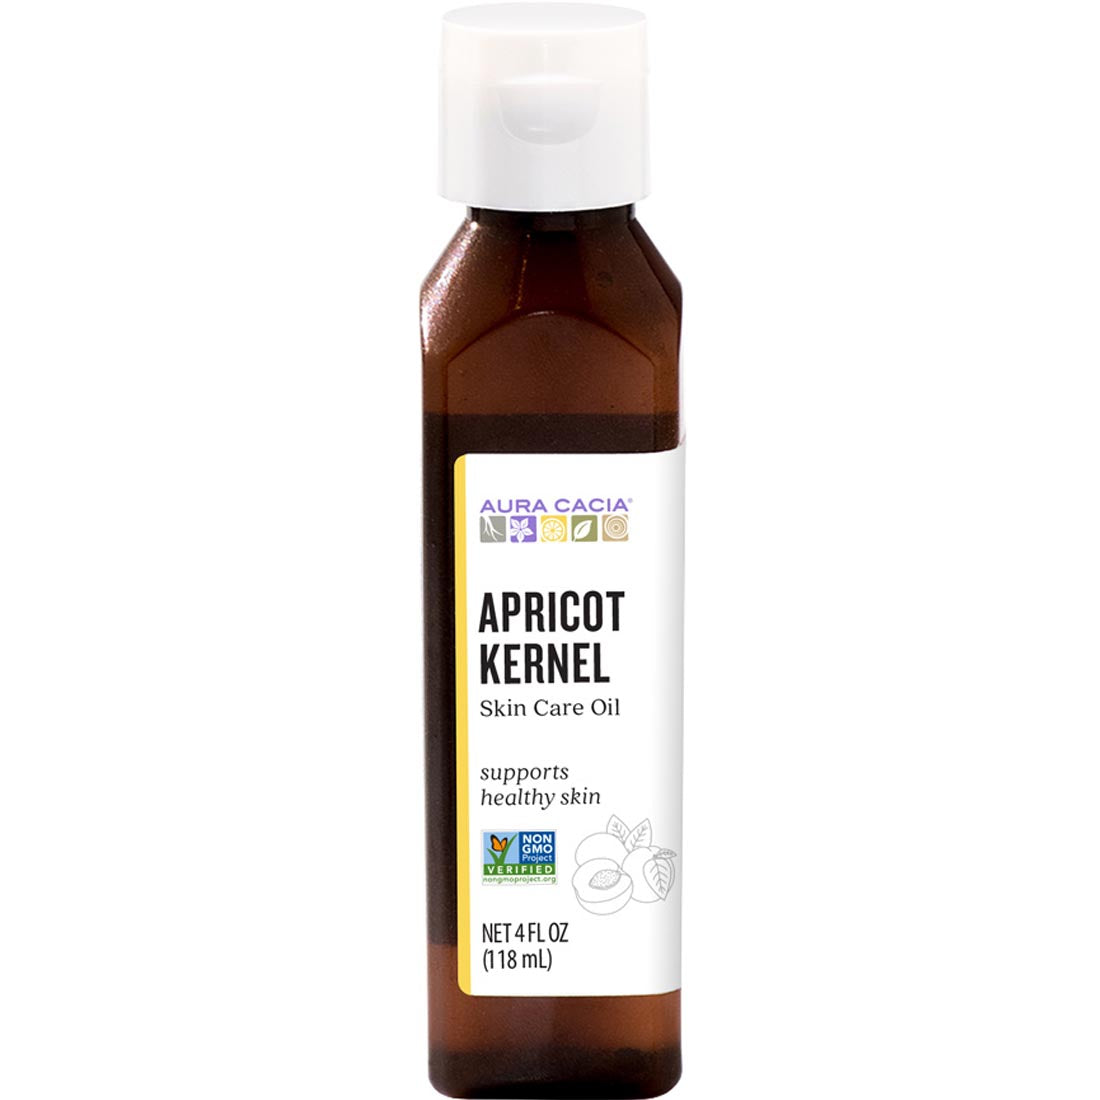 Aura Cacia Apricot Kernel Pure Skin Care Oil, 118ml